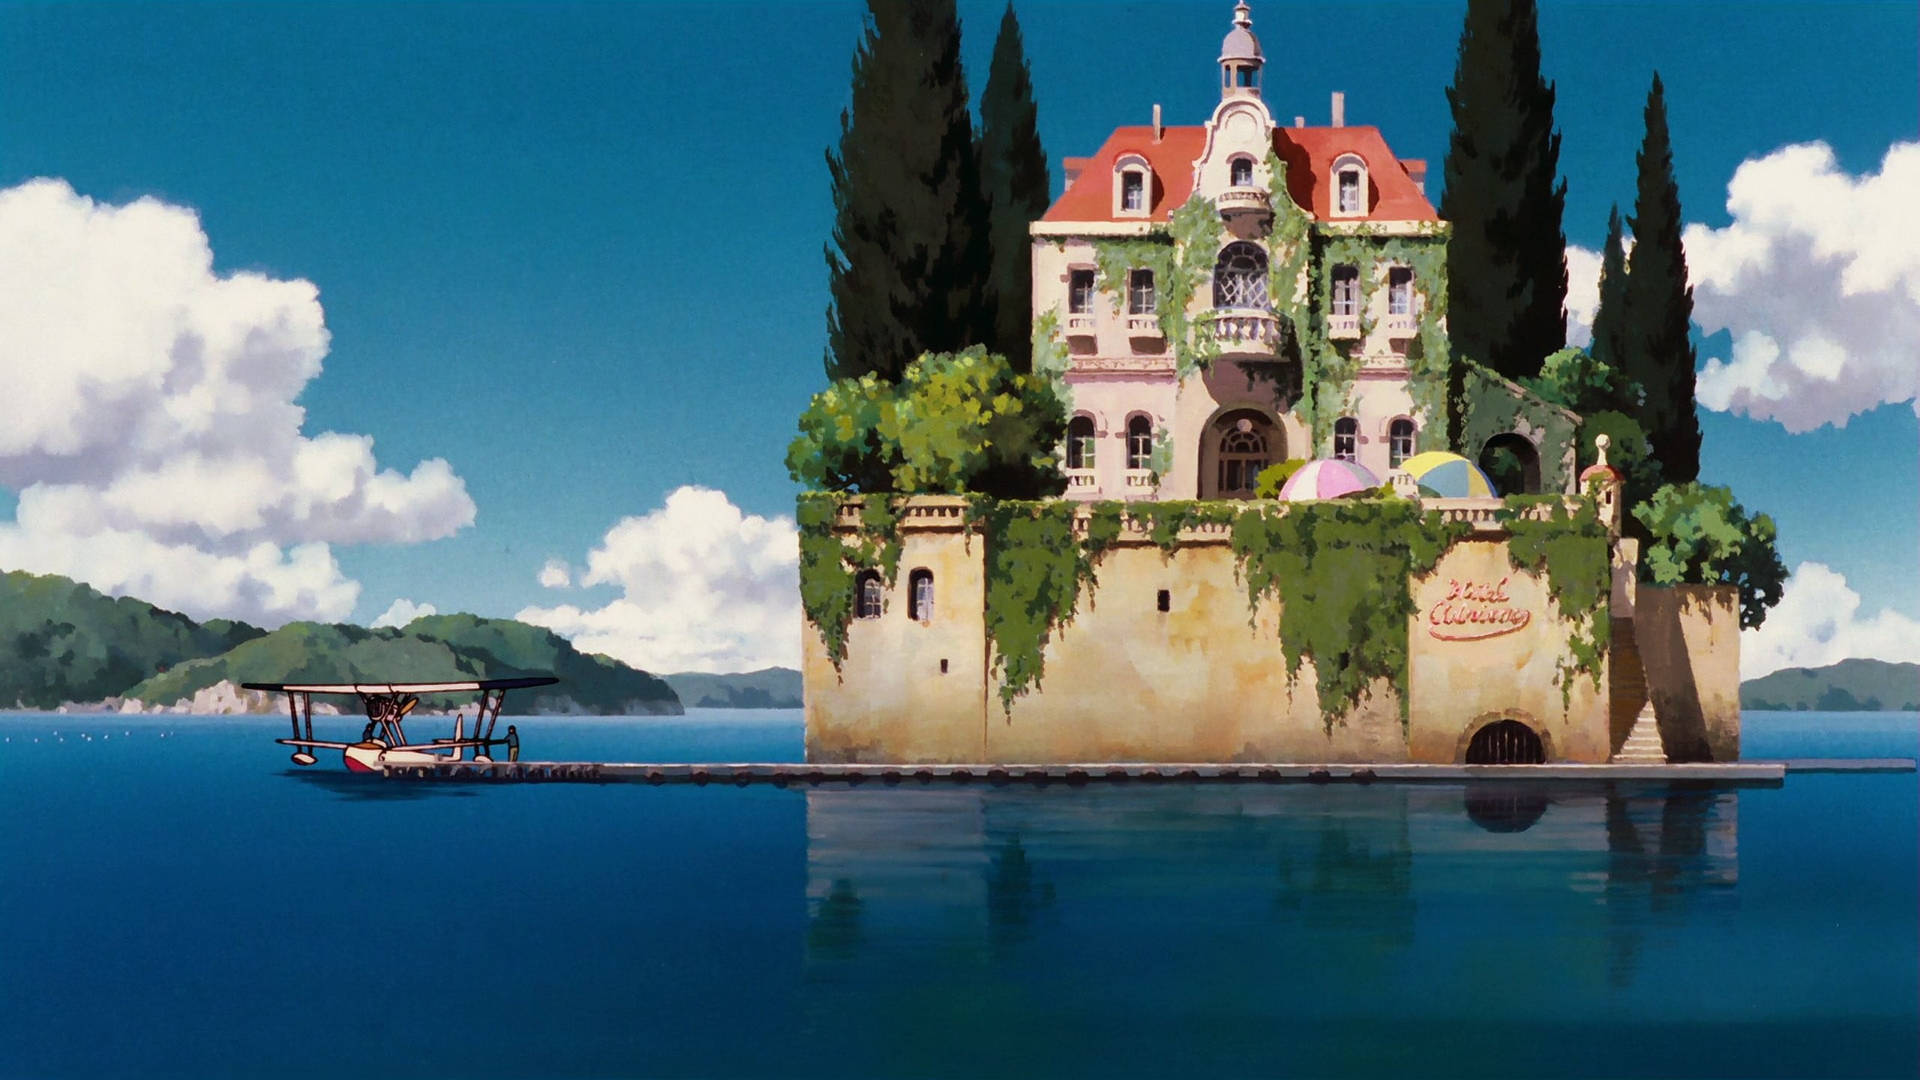 Studio Ghibli Scenery With Seaplane Background